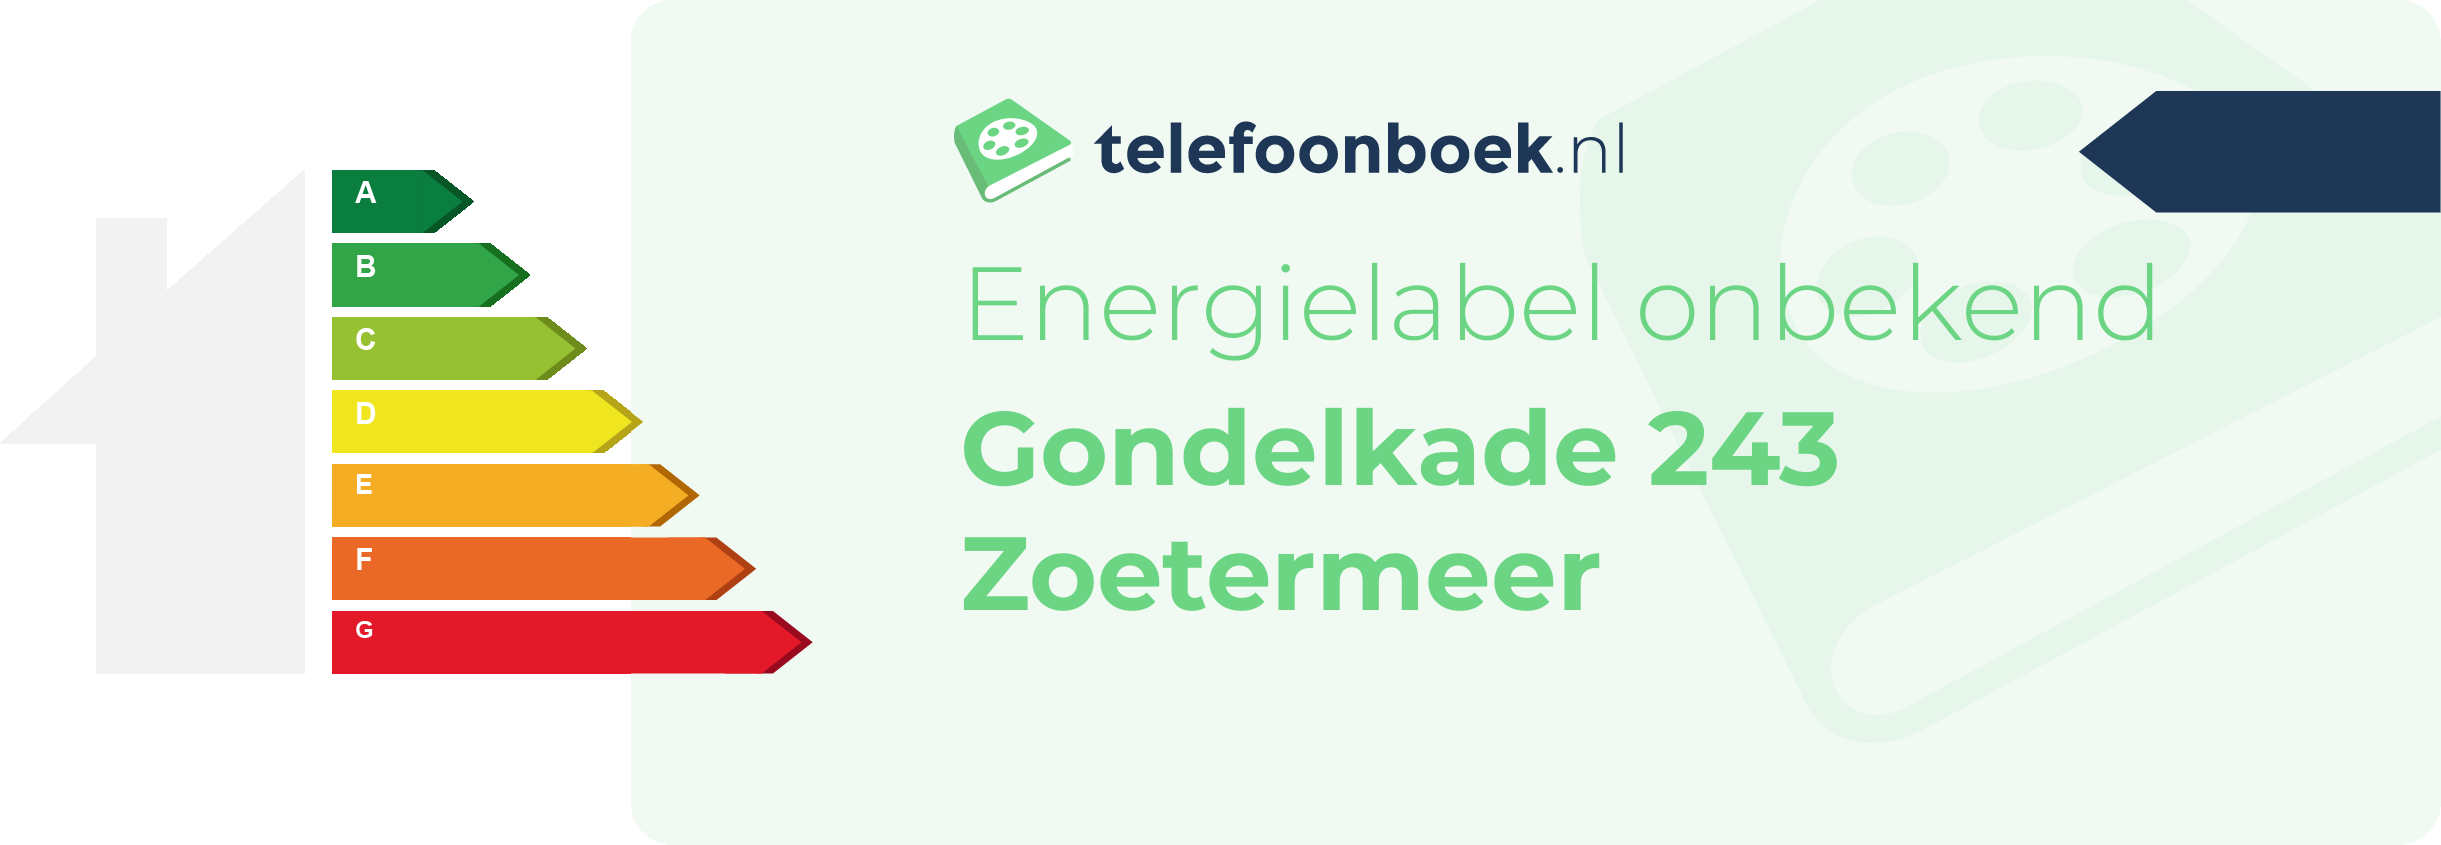 Energielabel Gondelkade 243 Zoetermeer